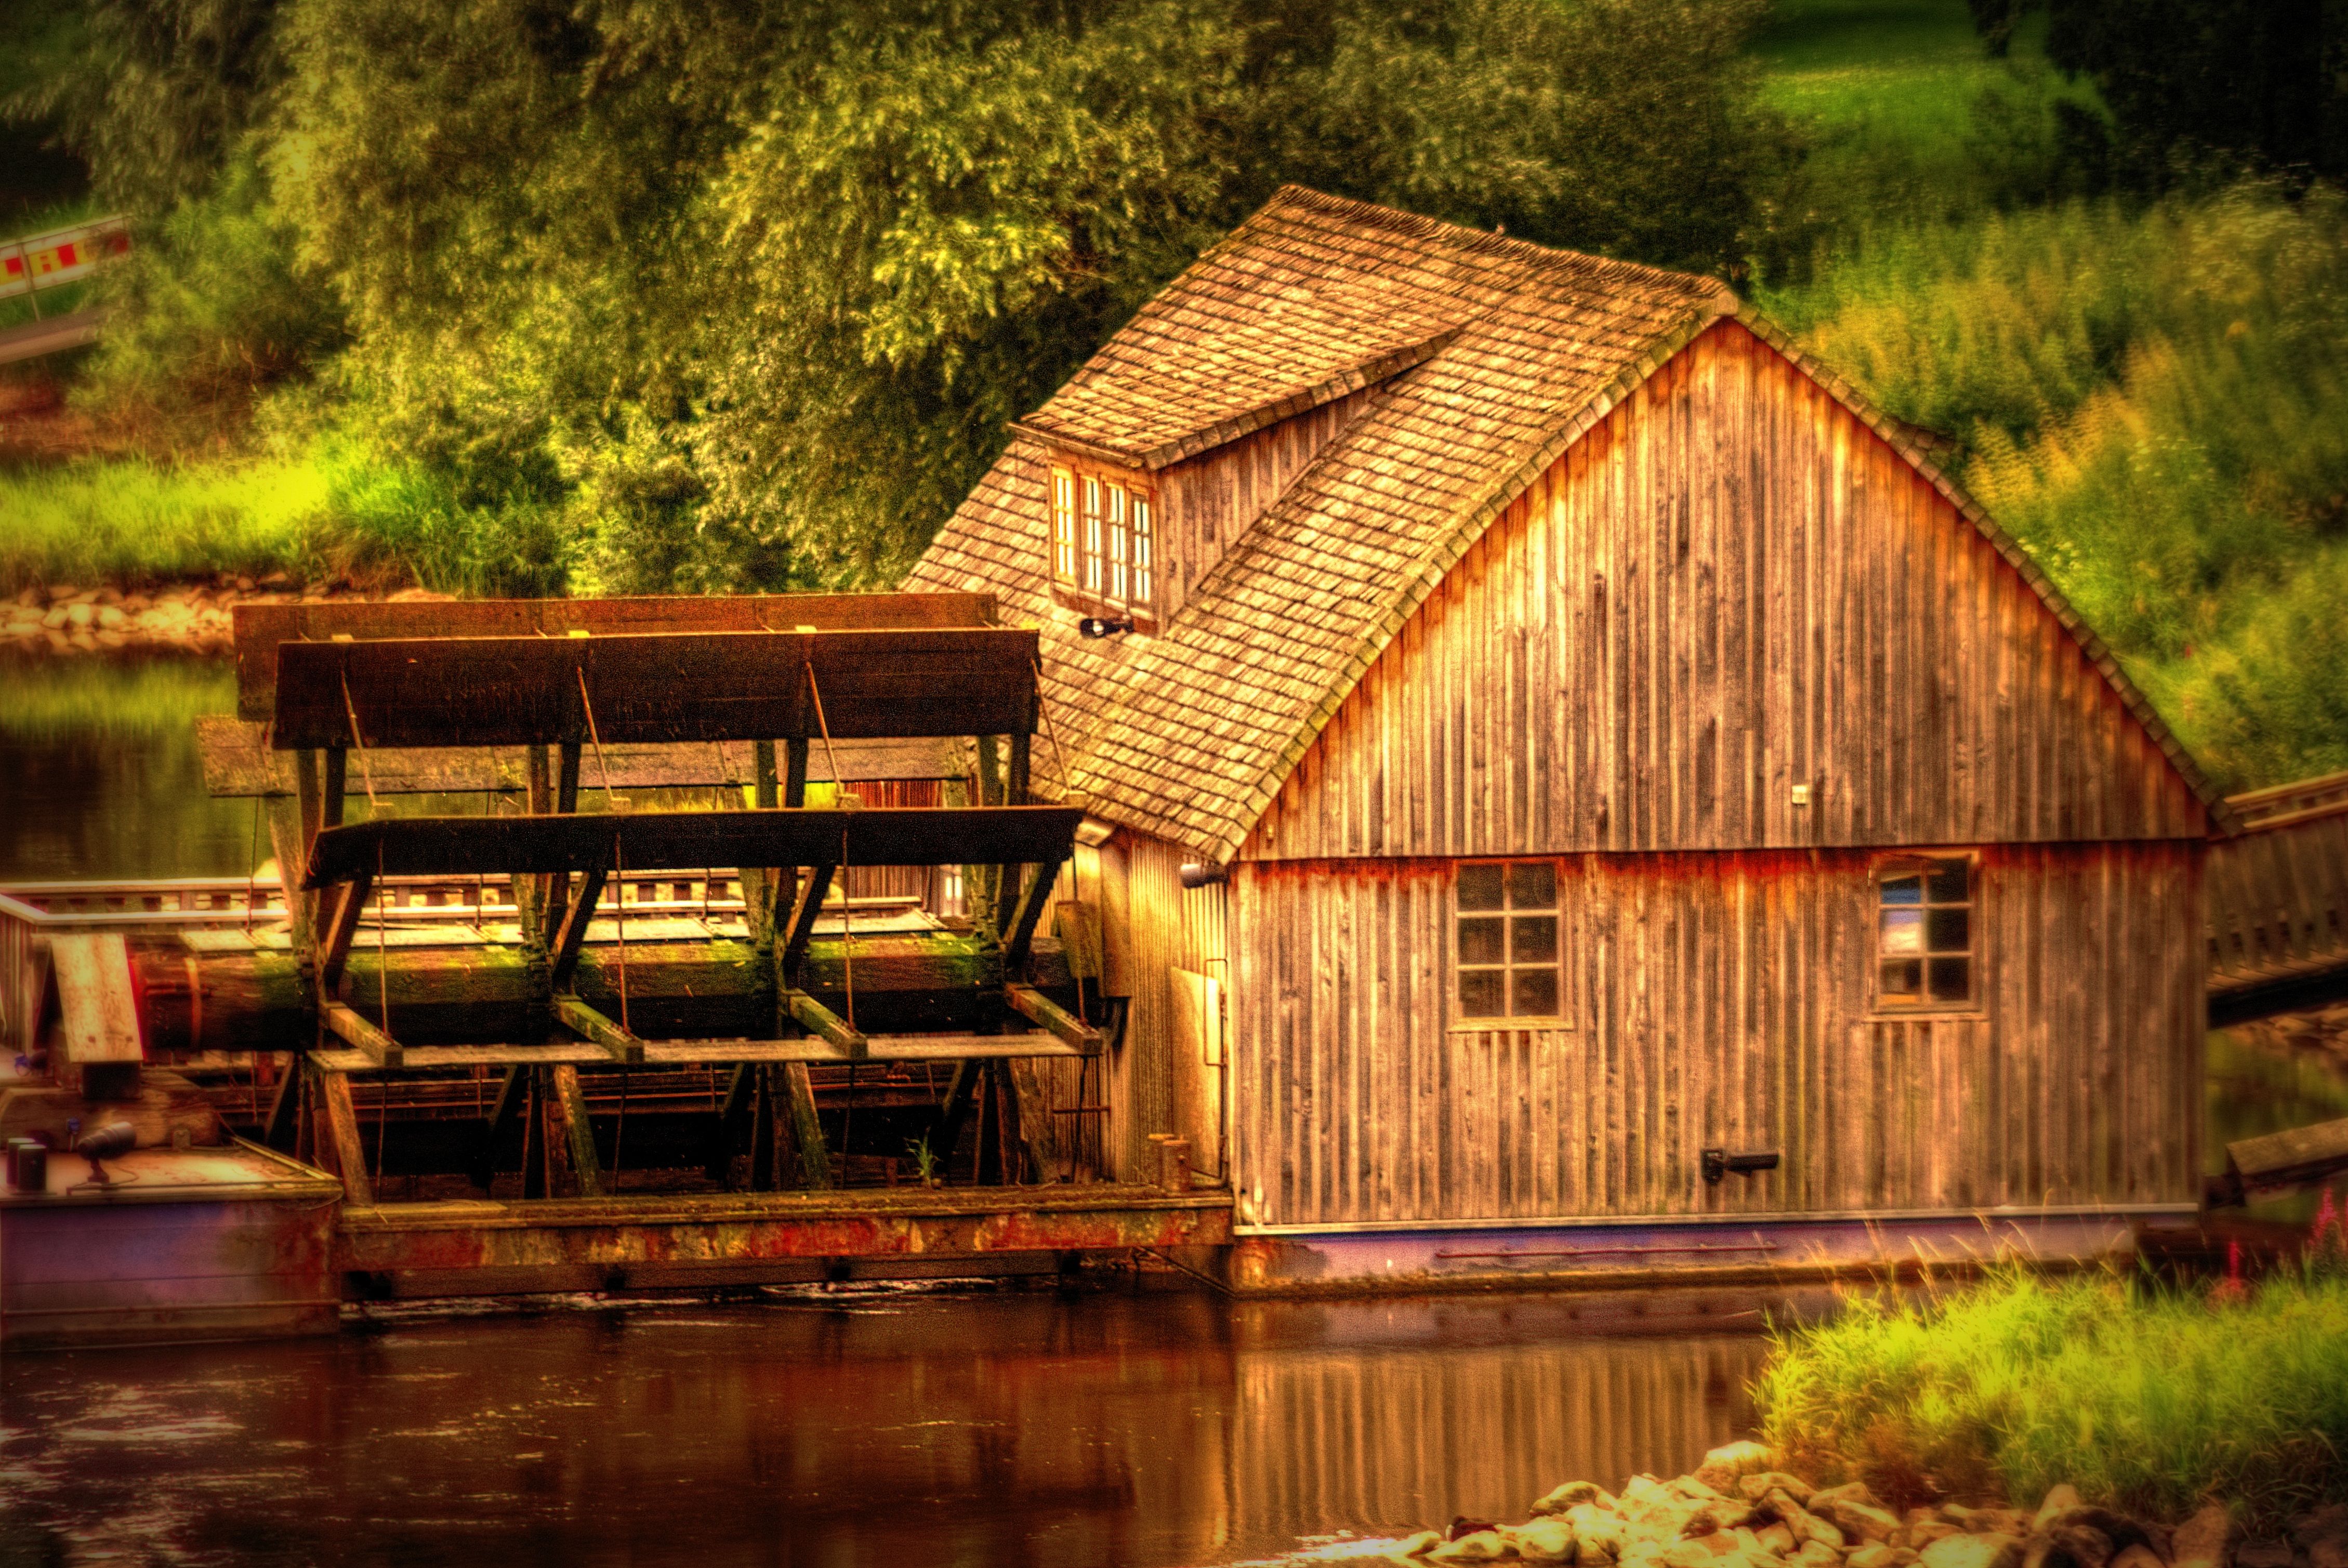 Watermill 4k Ultra HD Wallpaper Background Image